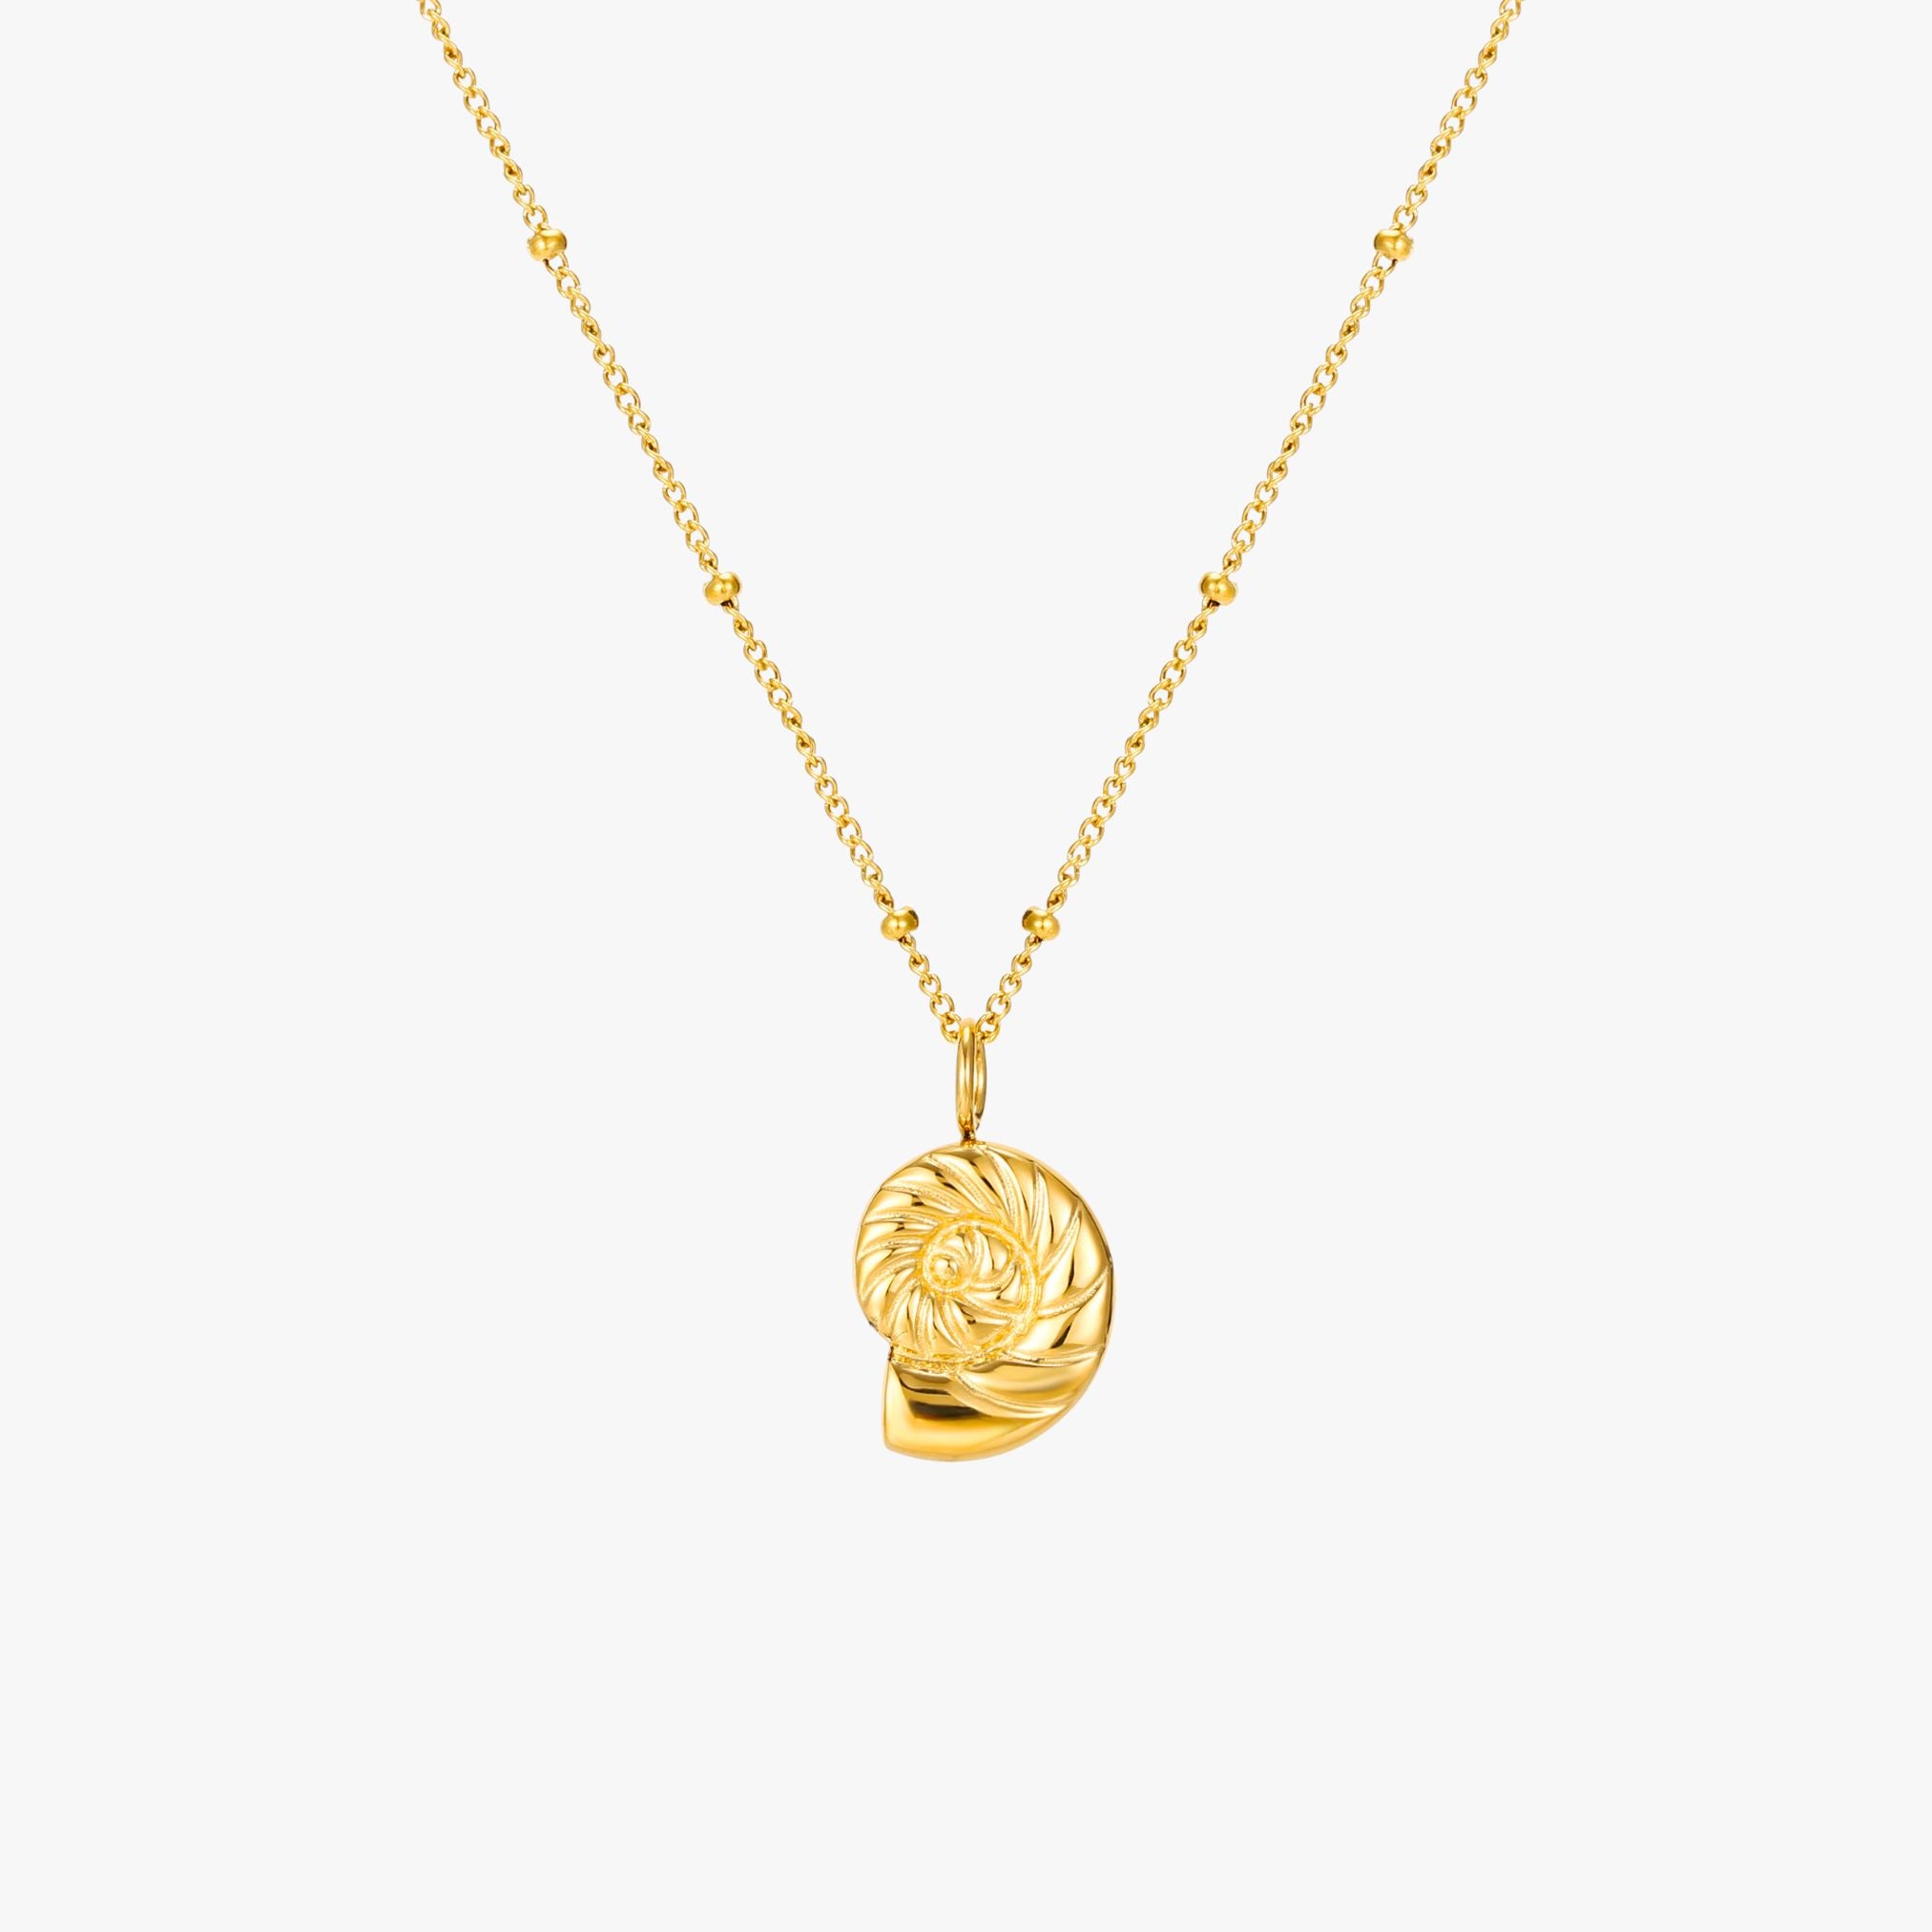 Gold nautilus necklace